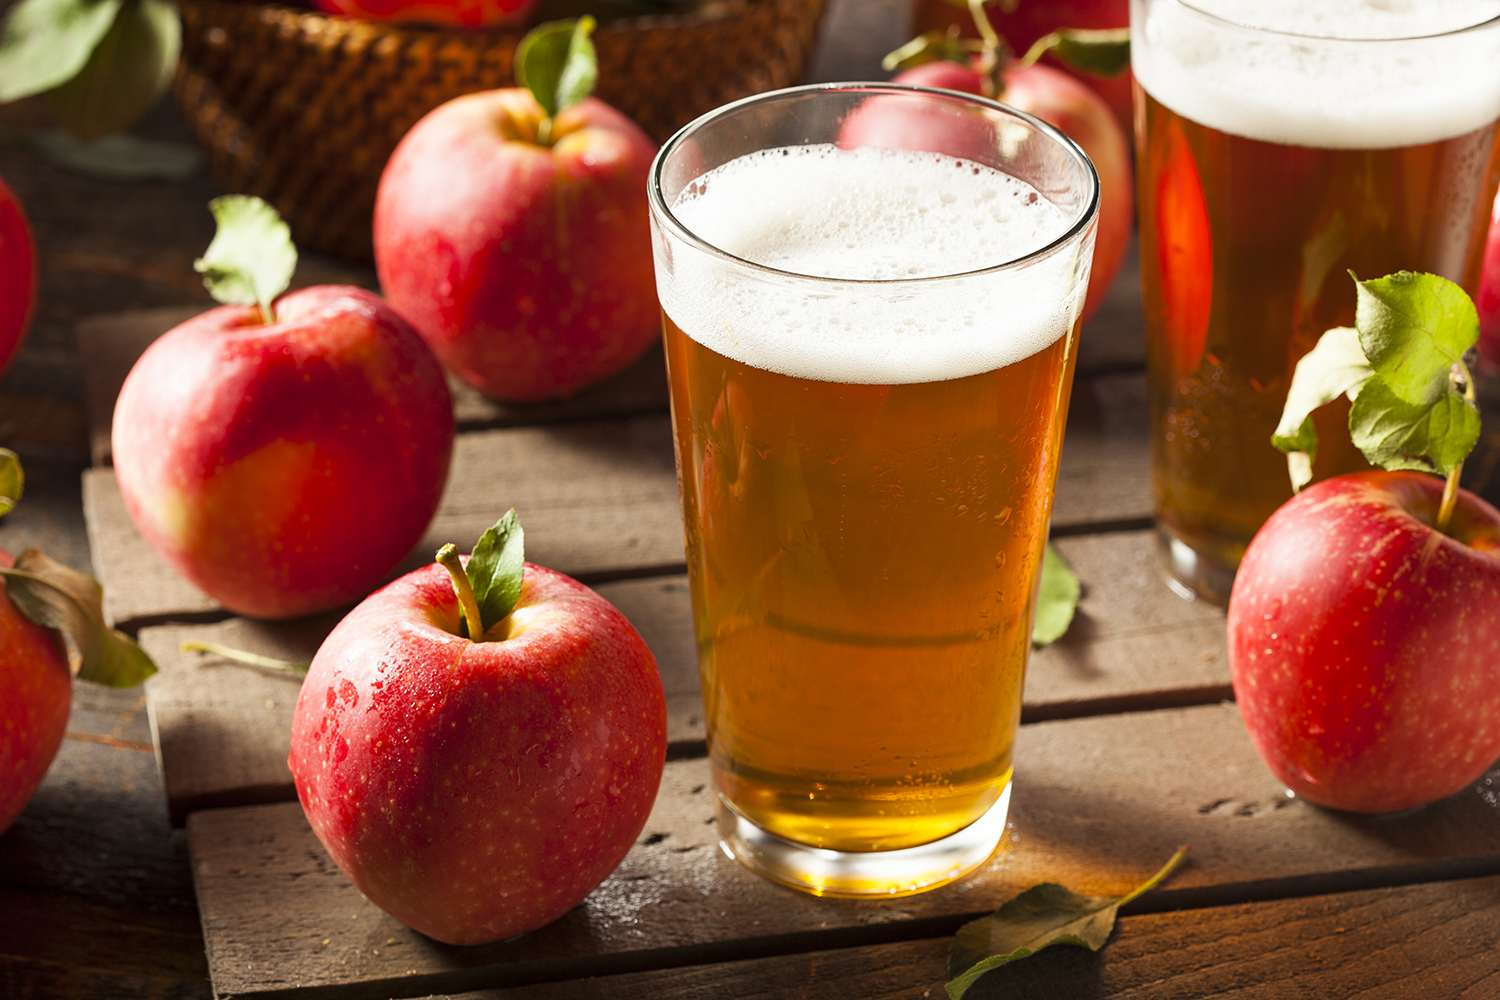 Best Apple Cider Recipe - How to Make Homemade Apple Cider